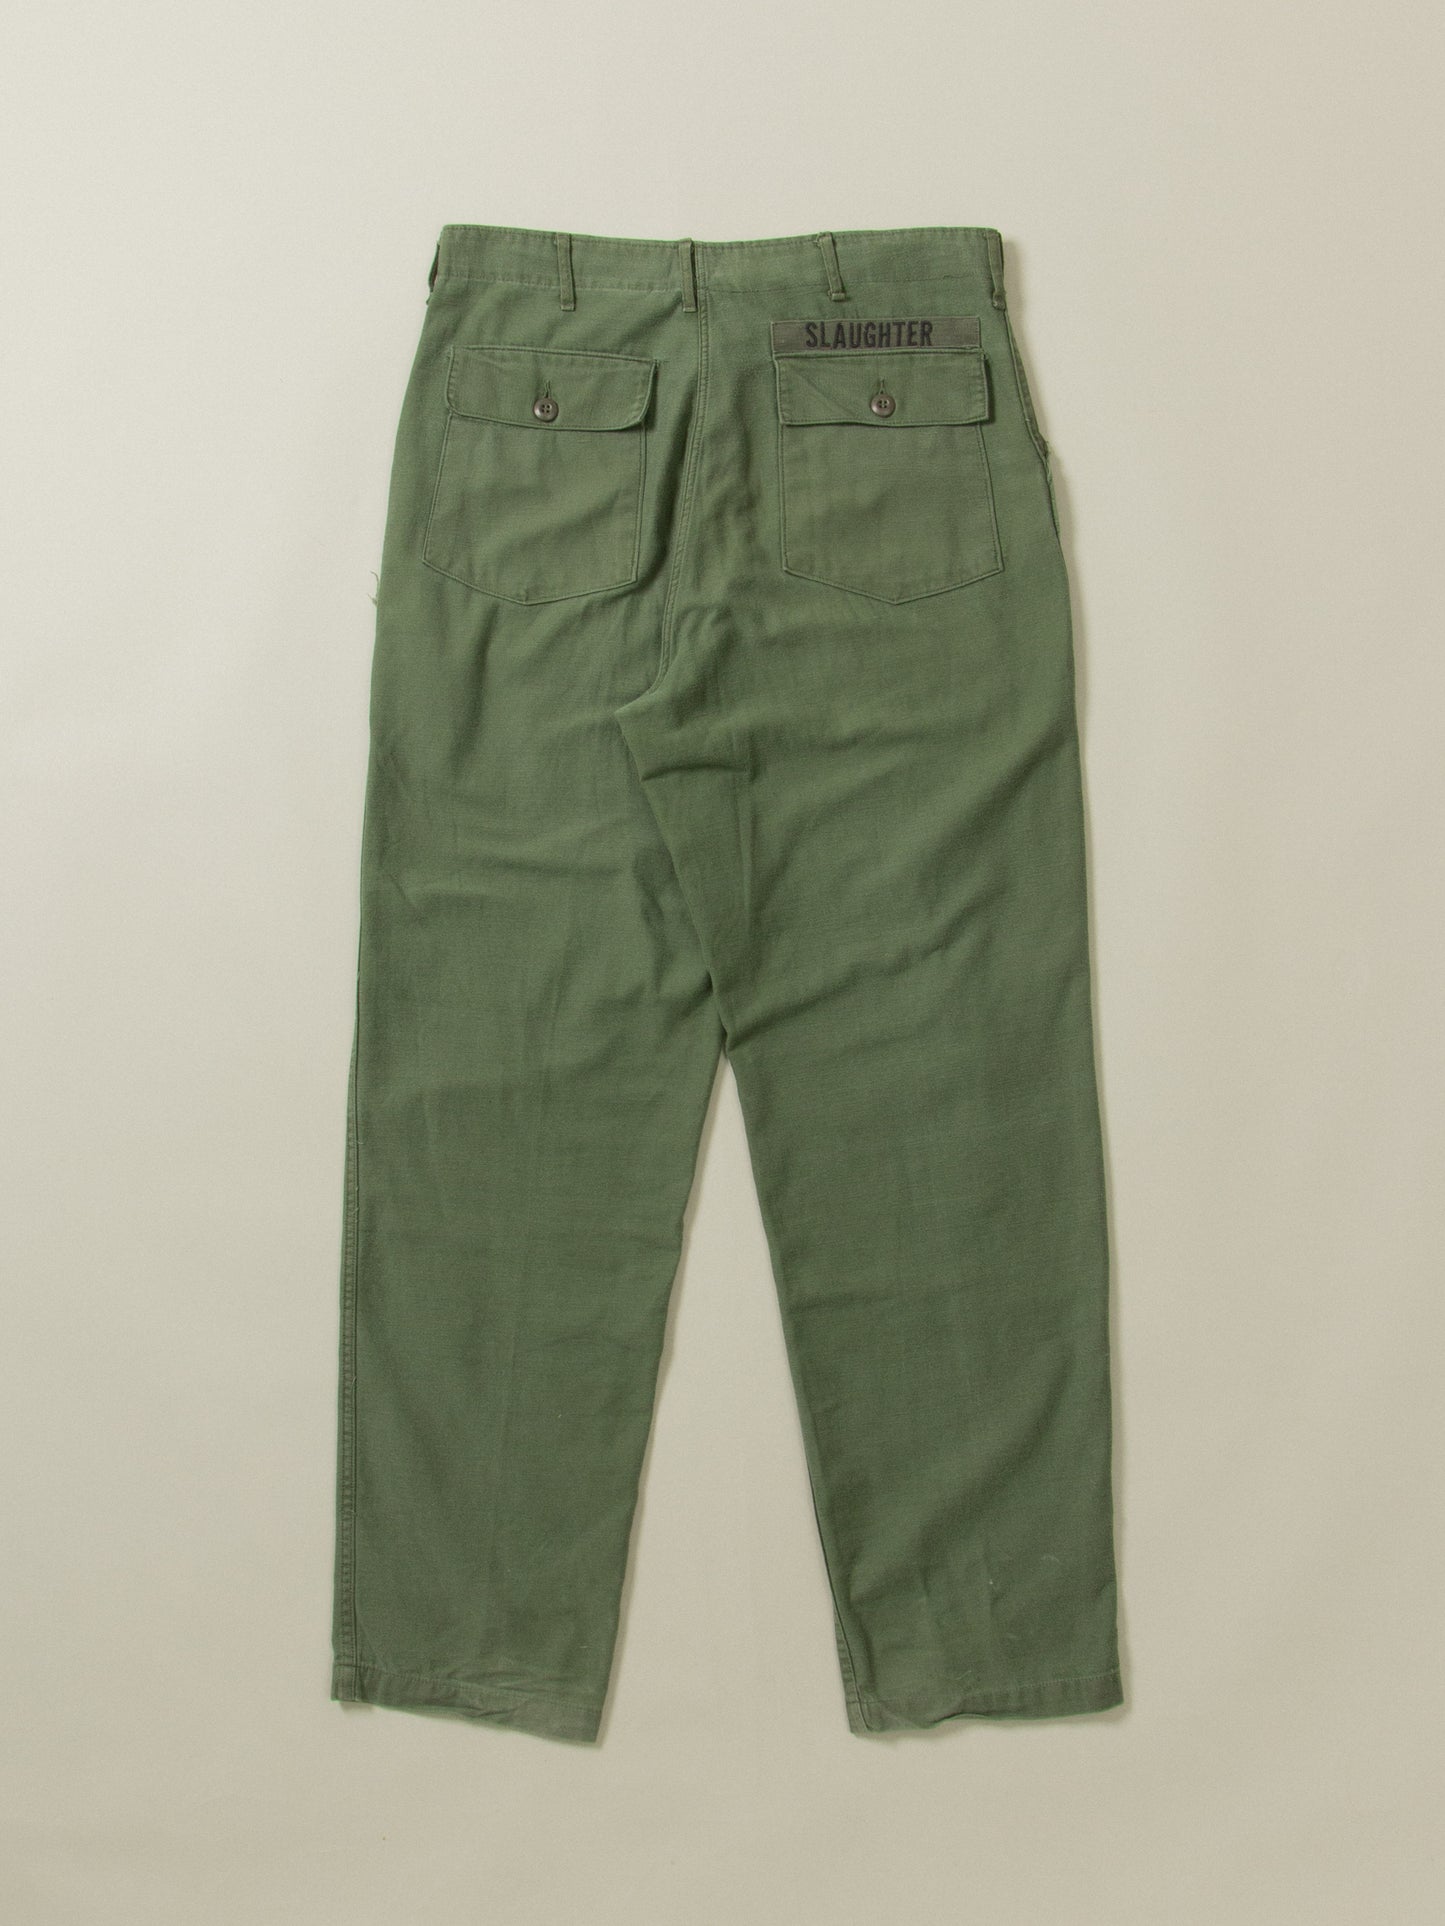 Vtg 1970s Vietnam War OG-107 Army Fatigue Pants (34x33)